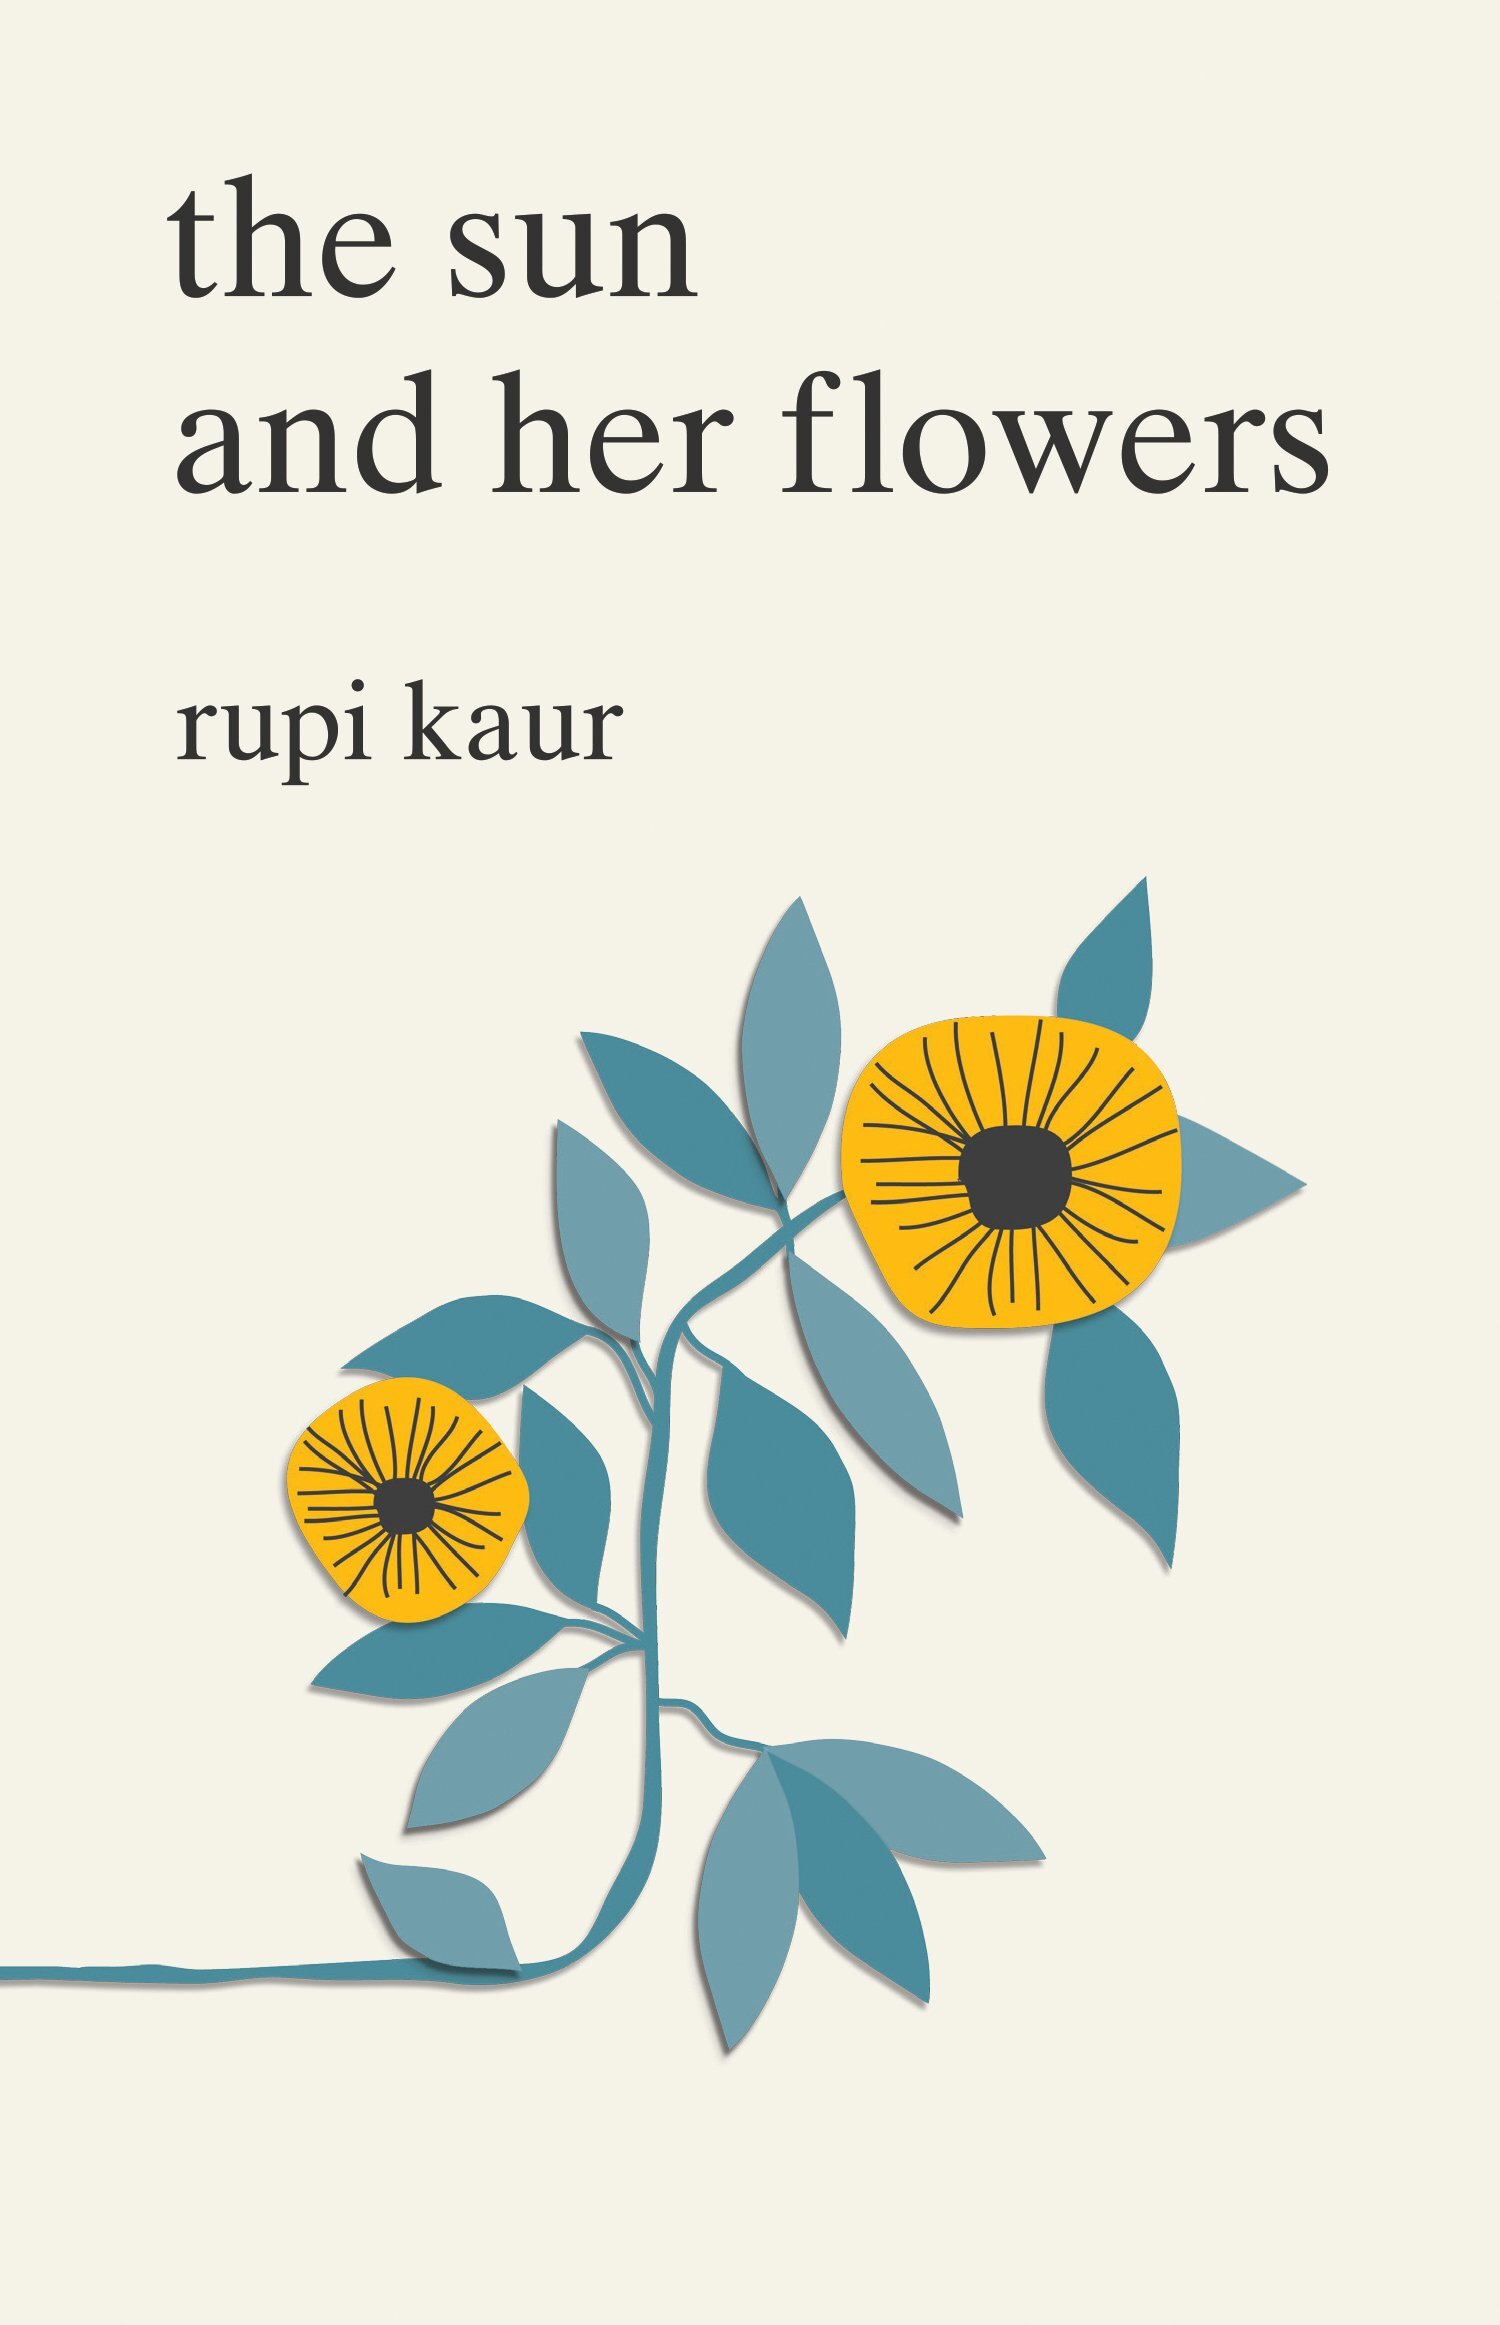 Le soleils et ses fleurs - Rupi Kaur - Nathalie Guéraud